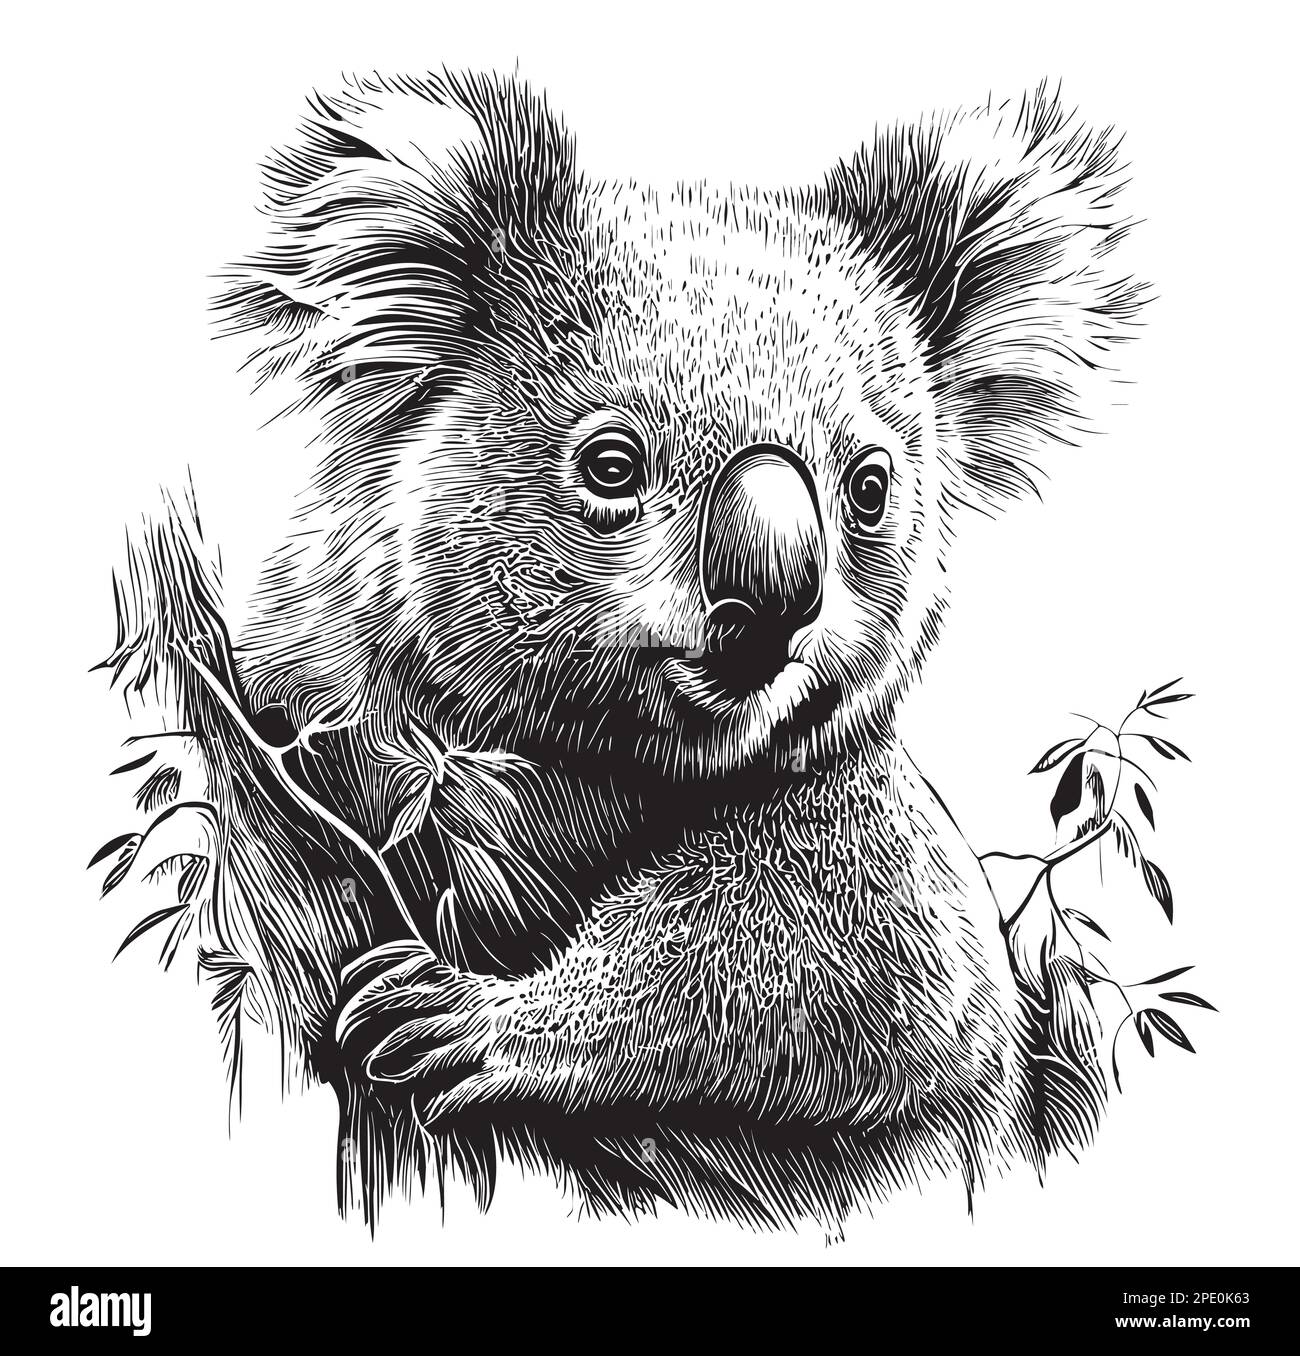 Koala portrait hand drawn sketch illustration, Wild animals Stock